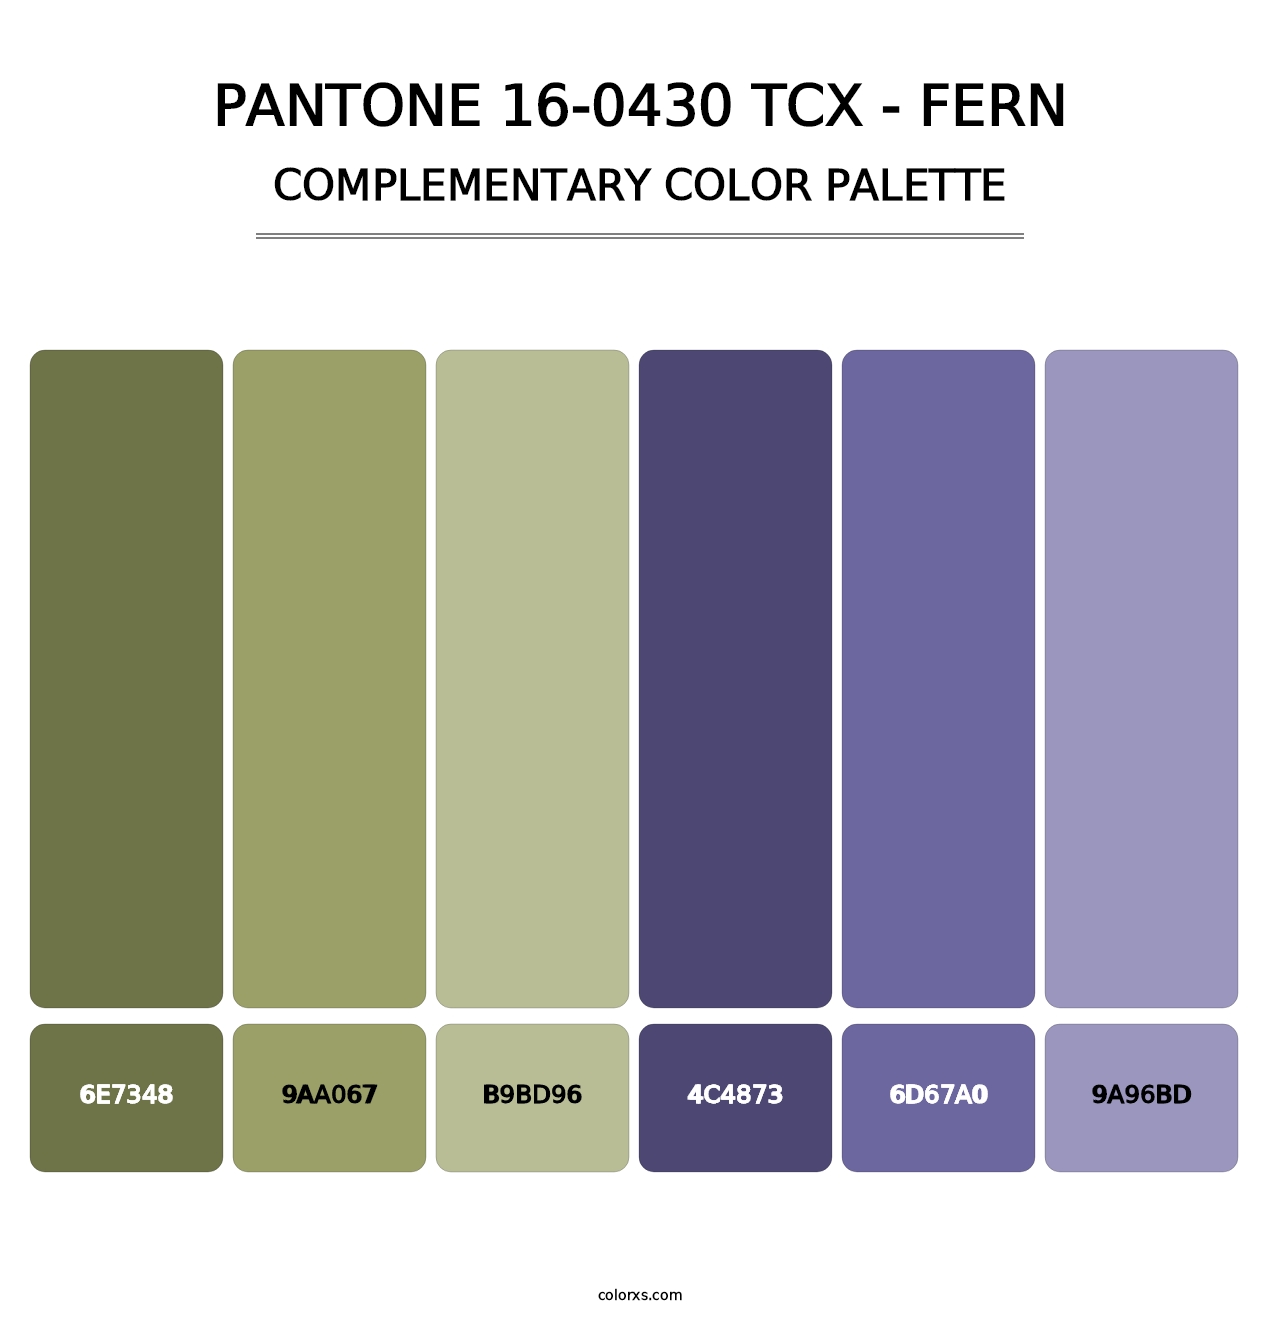 PANTONE 16-0430 TCX - Fern - Complementary Color Palette